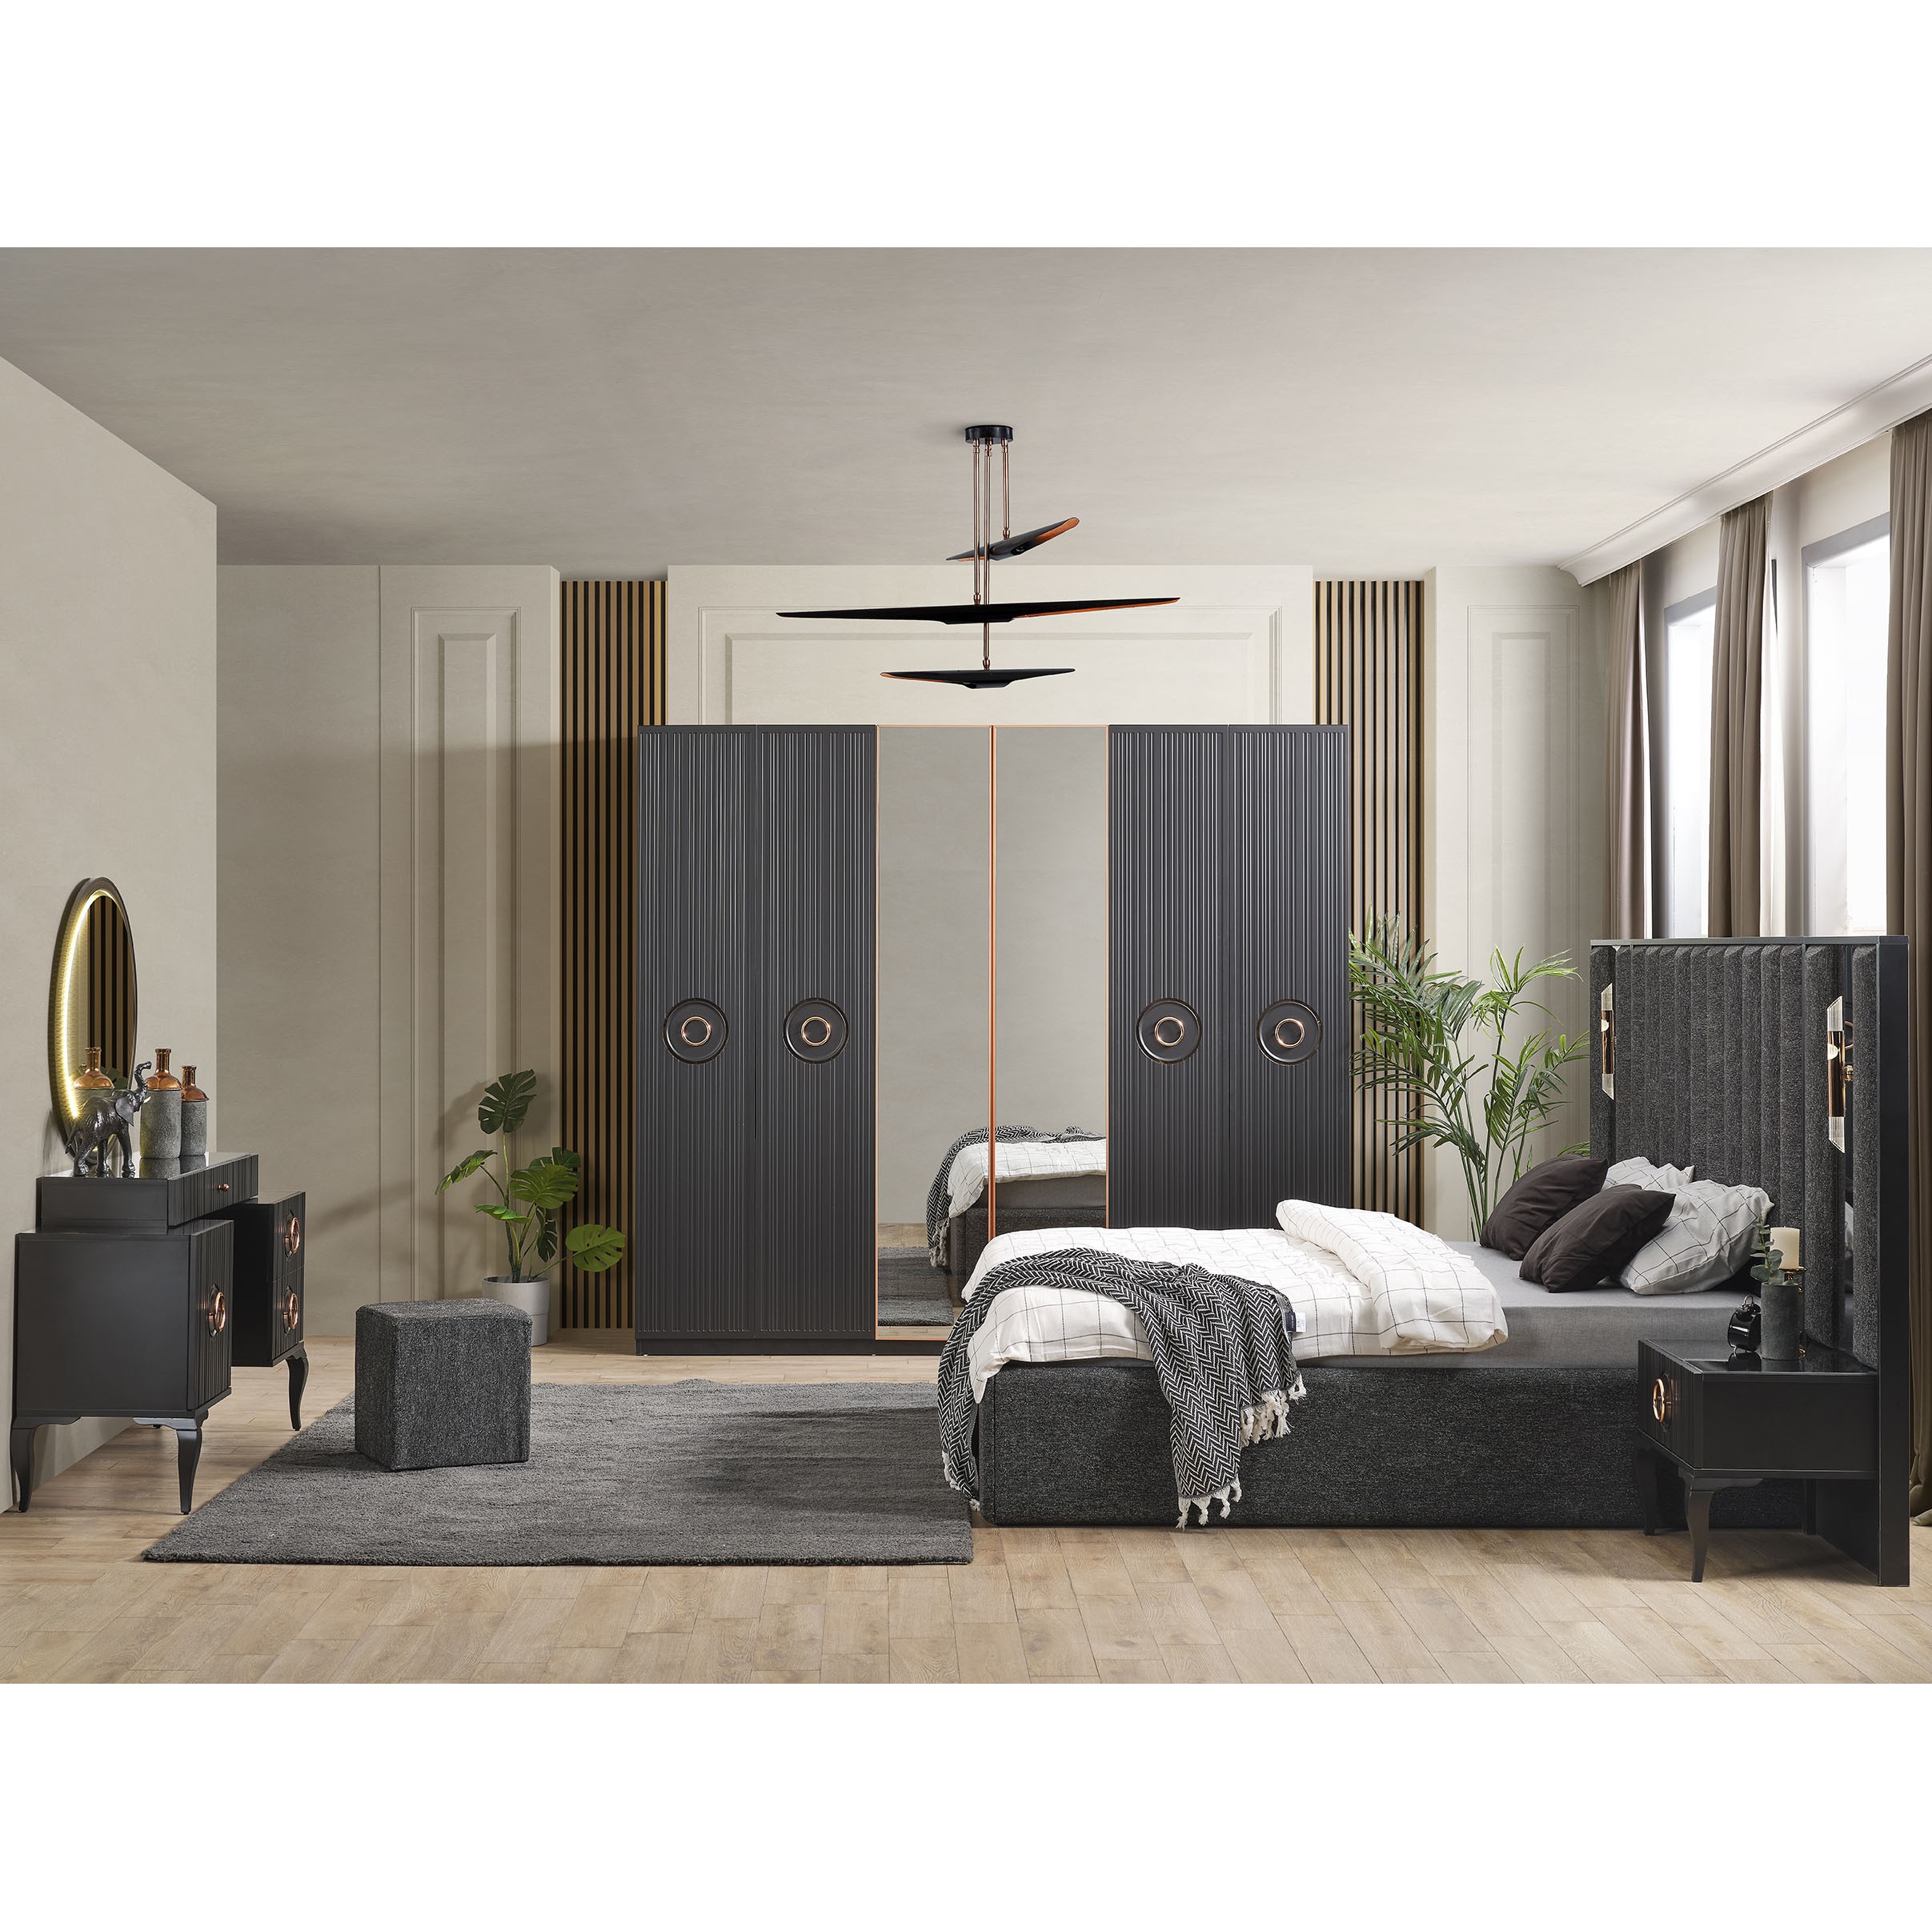 Style Larissa Vol2 Bed With Storage 160x200 cm